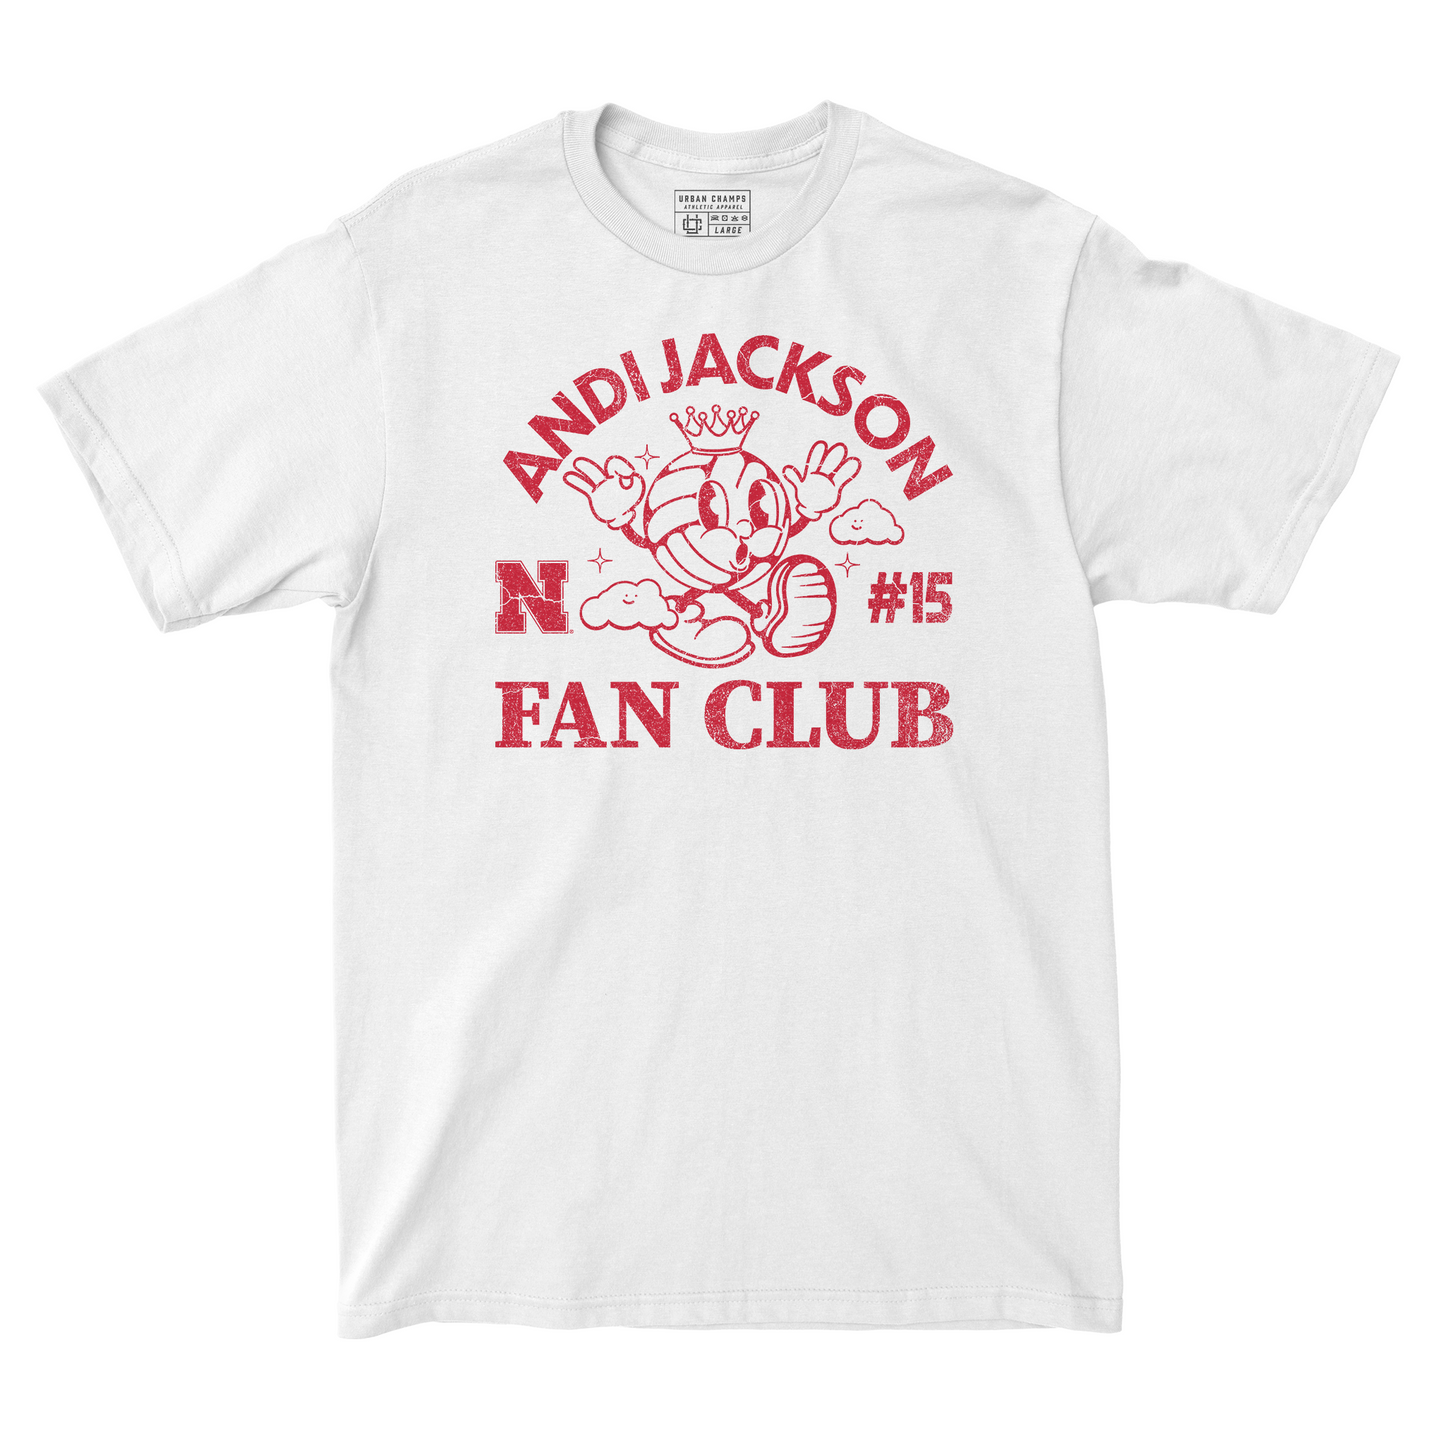 EXCLUSIVE: Nebraska Women's Volleyball - Andi Jackson - Fan Club Collection Tees